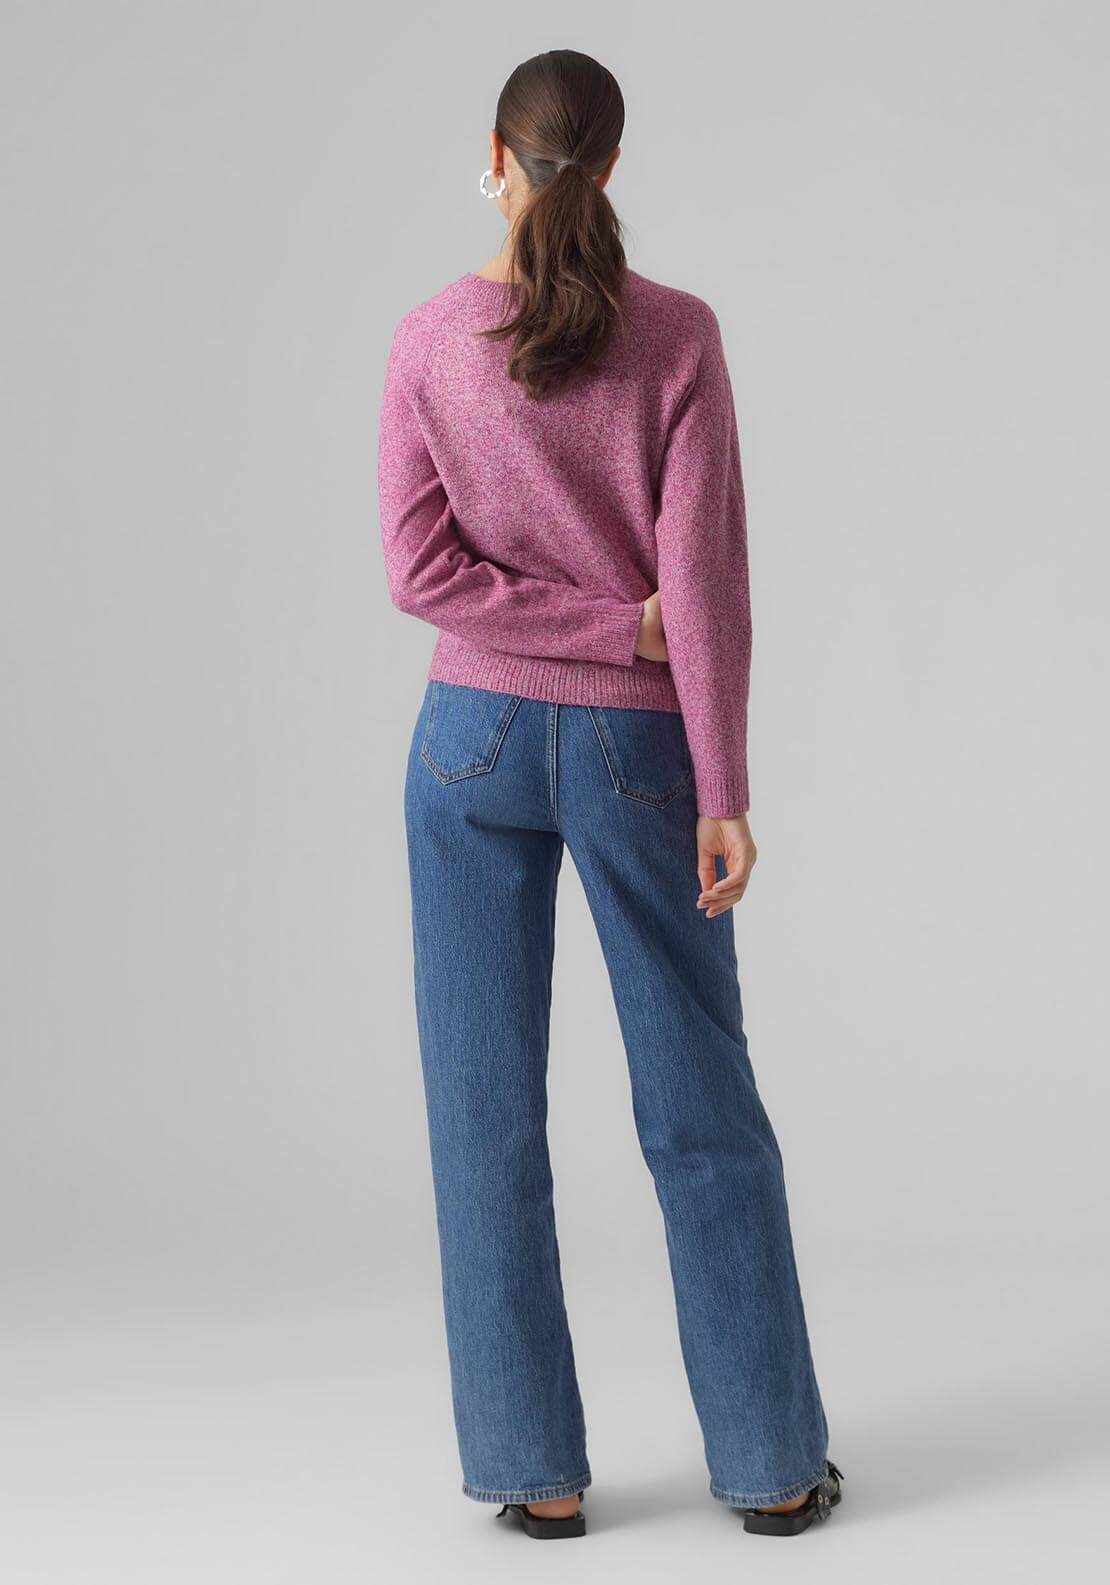 Vero Moda Pullover Jumper - Pink 3 Shaws Department Stores